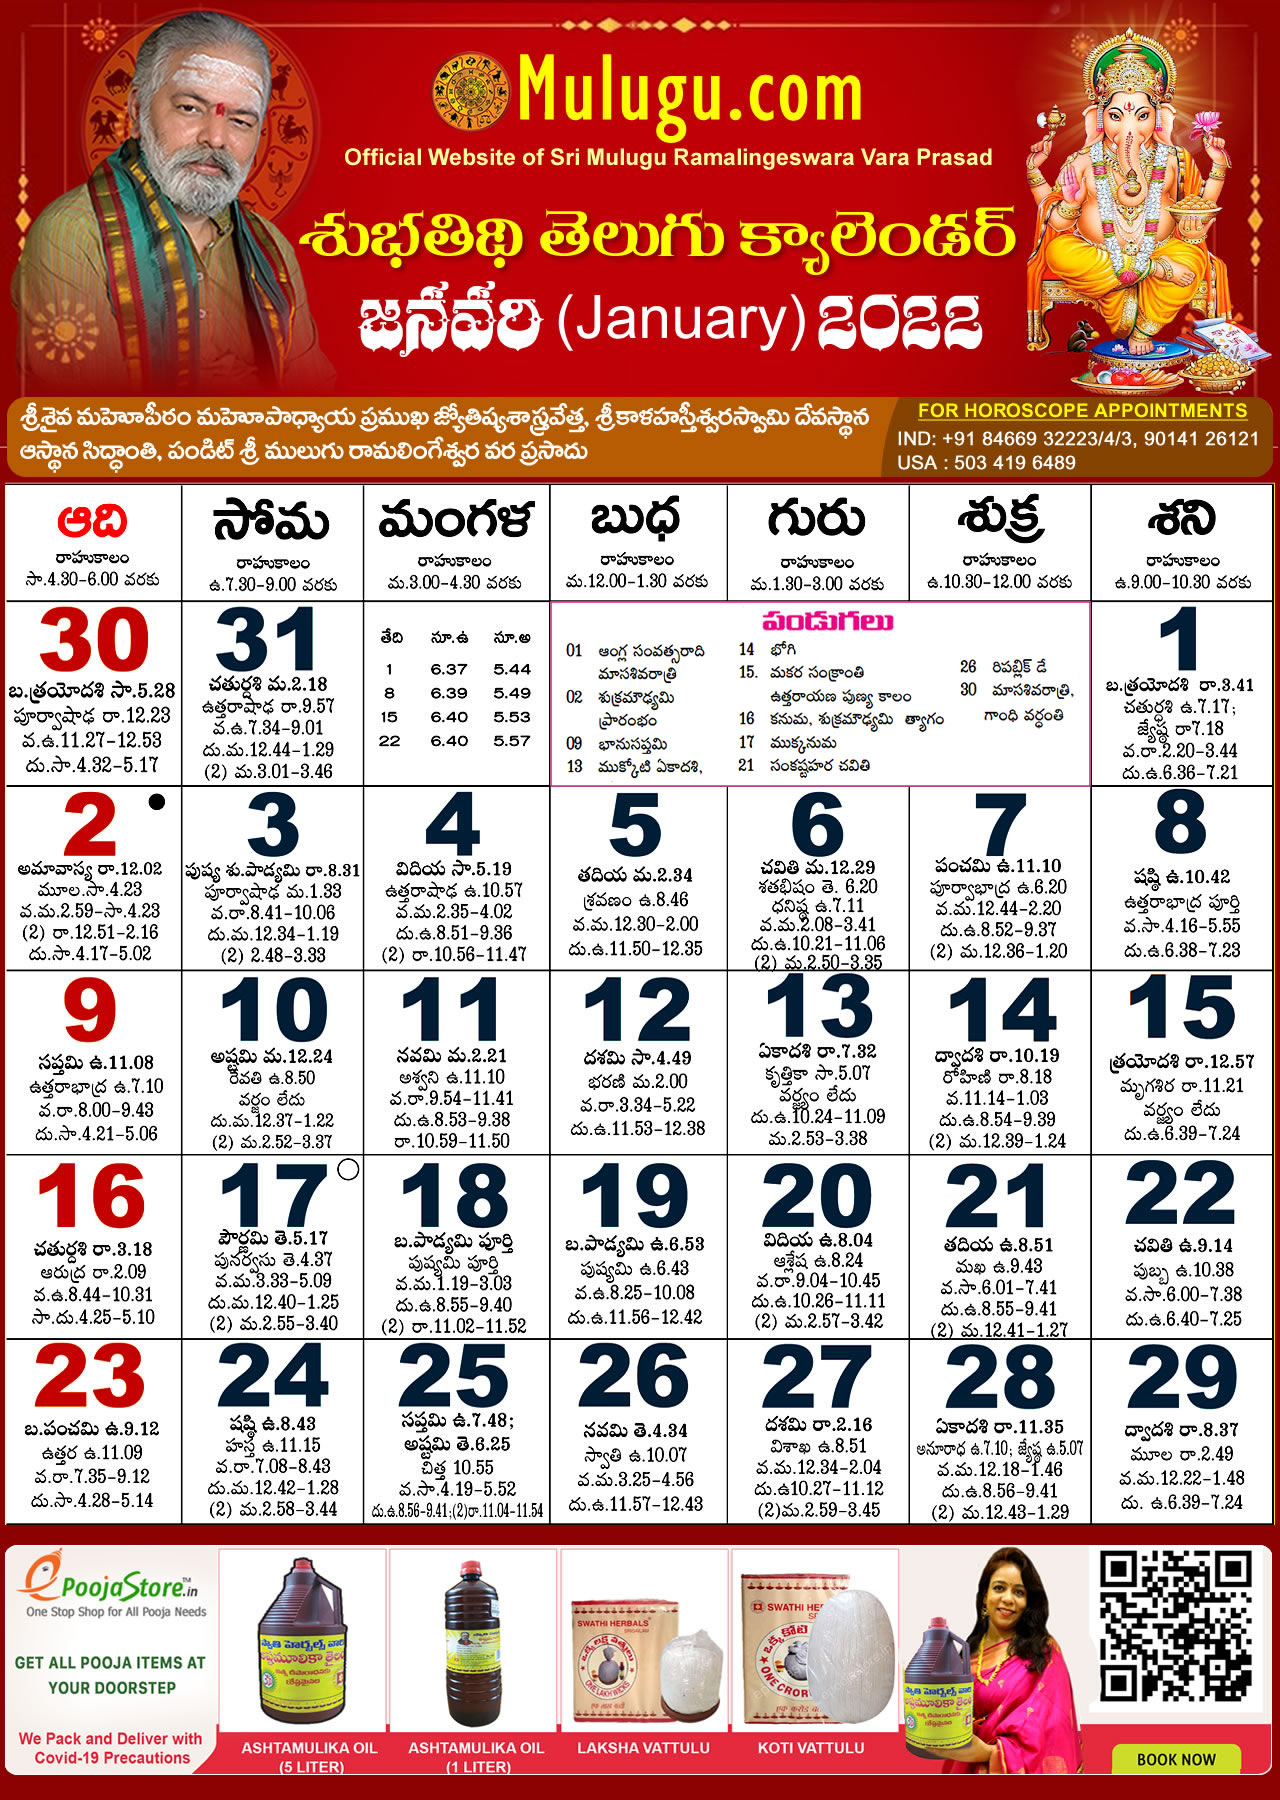 Eenadu Calendar 2022 Subhathidi January Telugu Calendar 2022 | Telugu Calendar 2022 - 2023 |  Telugu Subhathidi Calendar 2022 | Calendar 2022 | Telugu Calendar 2022 |  Subhathidi Calendar 2022 - Chicago Calendar 2022 Los